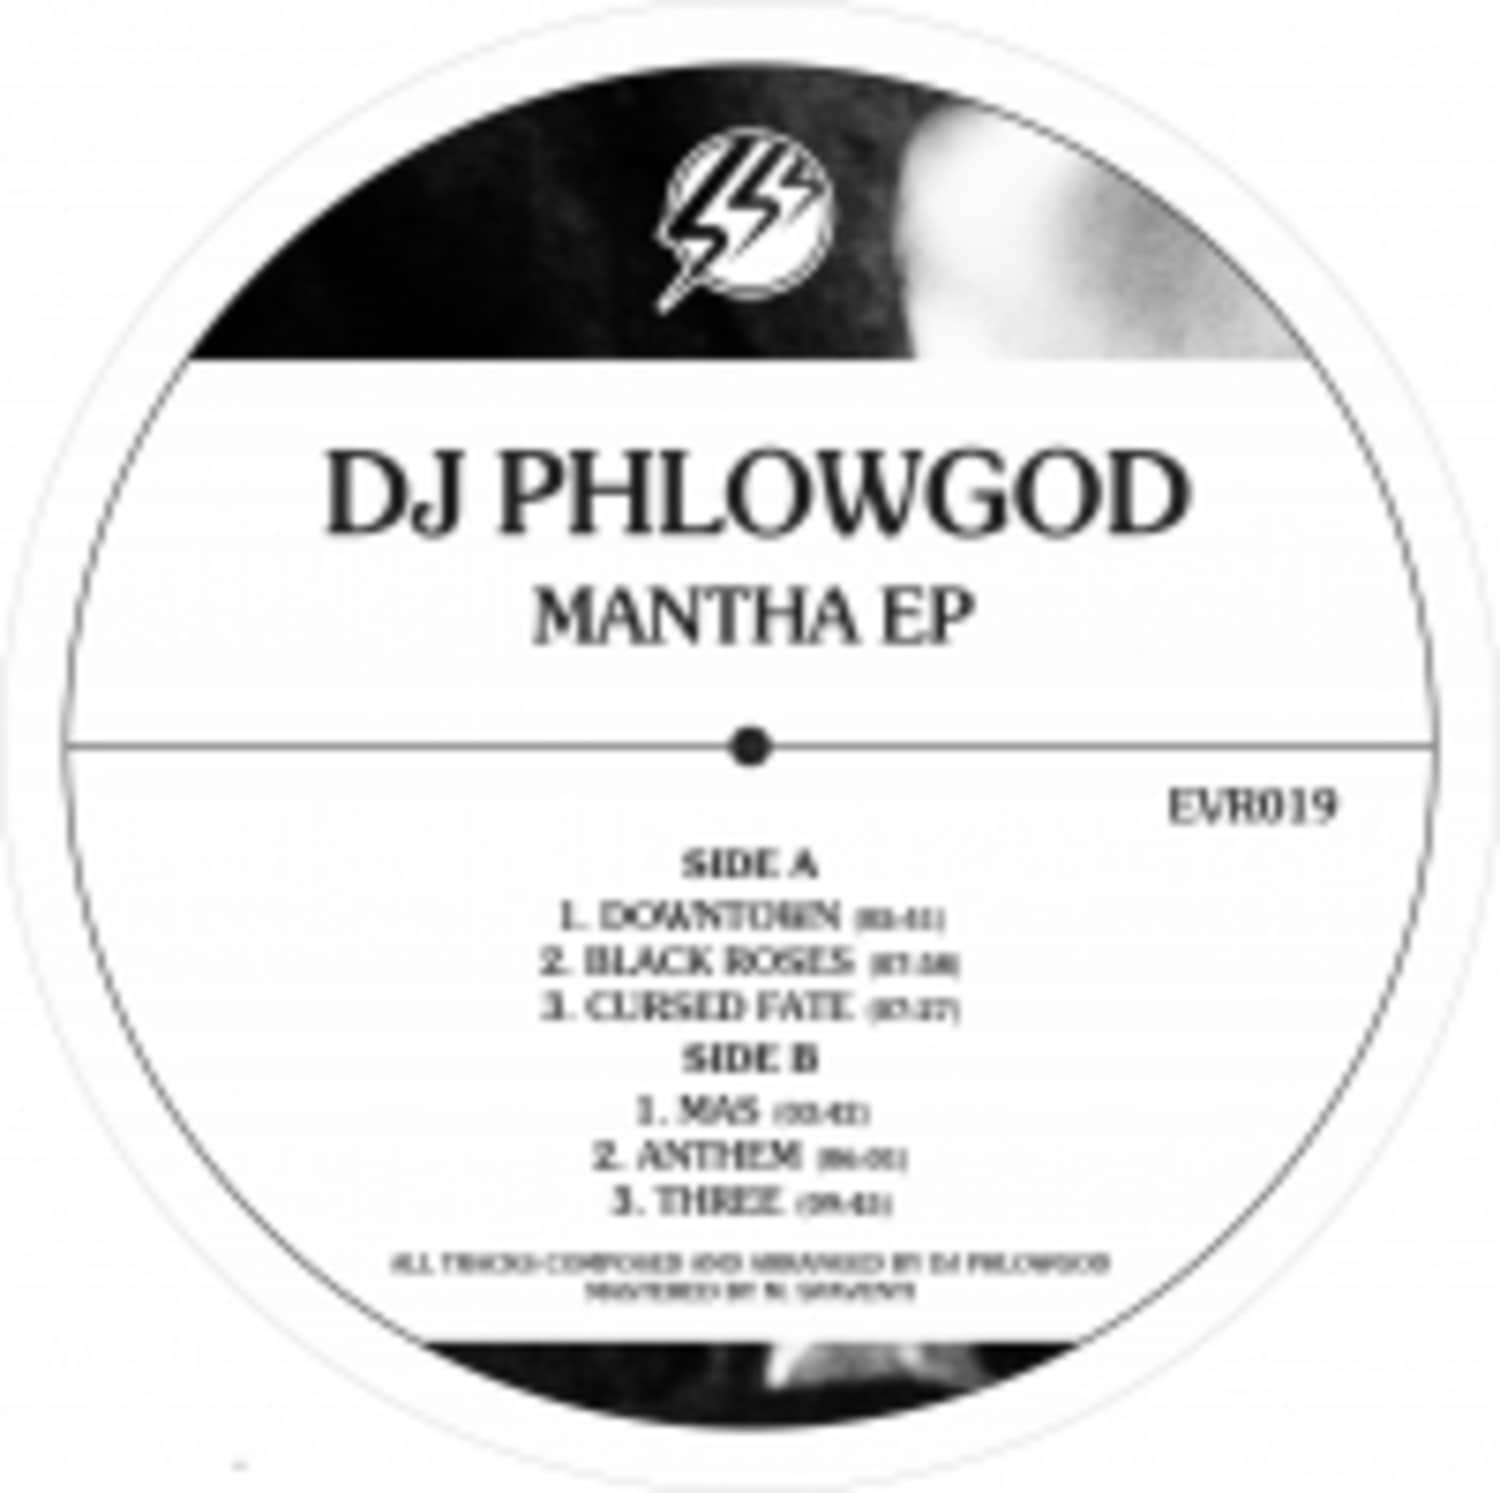 DJ Phlowgod - MANTHA EP